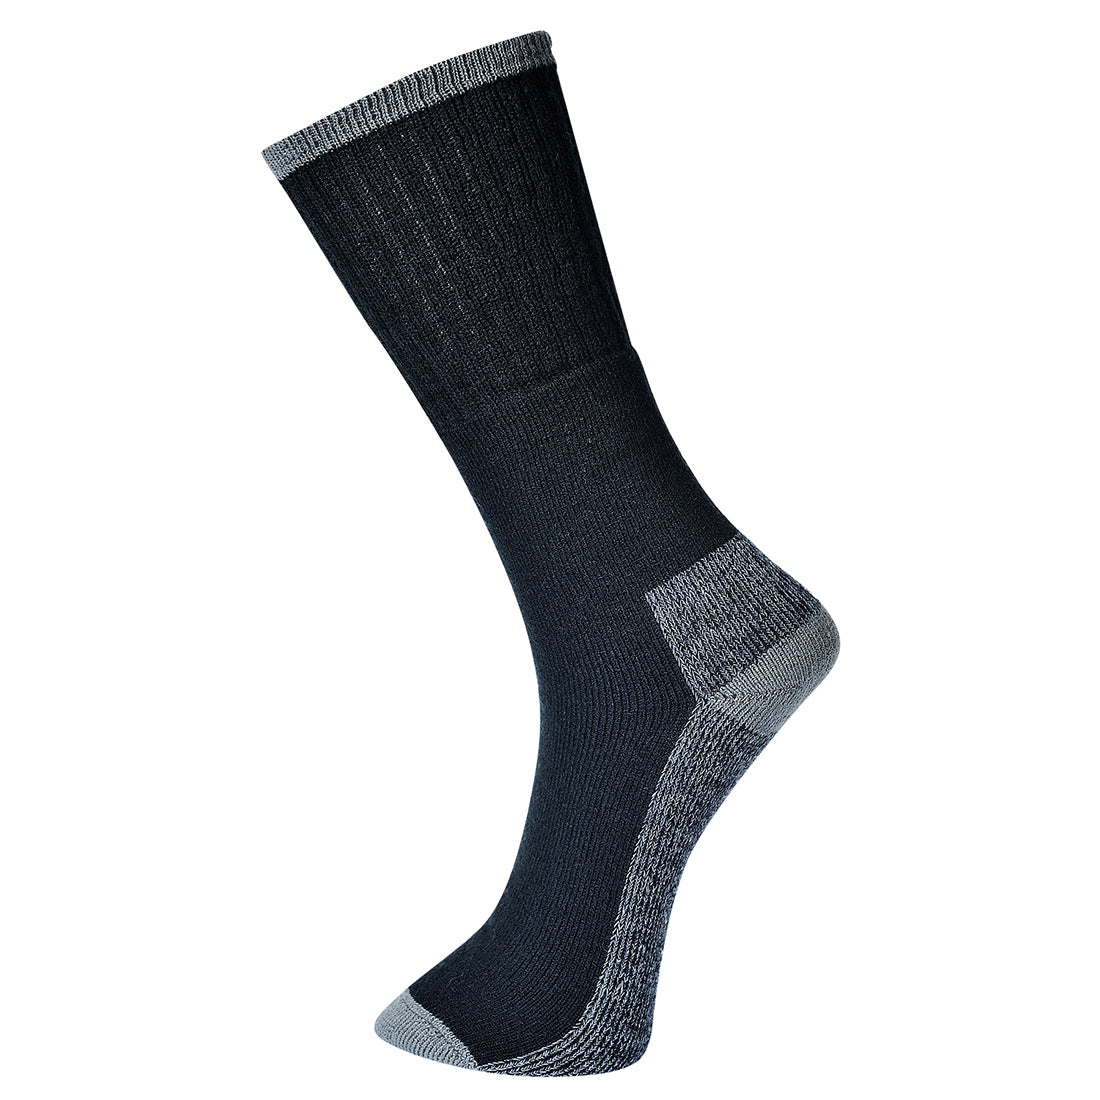 Work Sock 3pk Black and grey - SK33